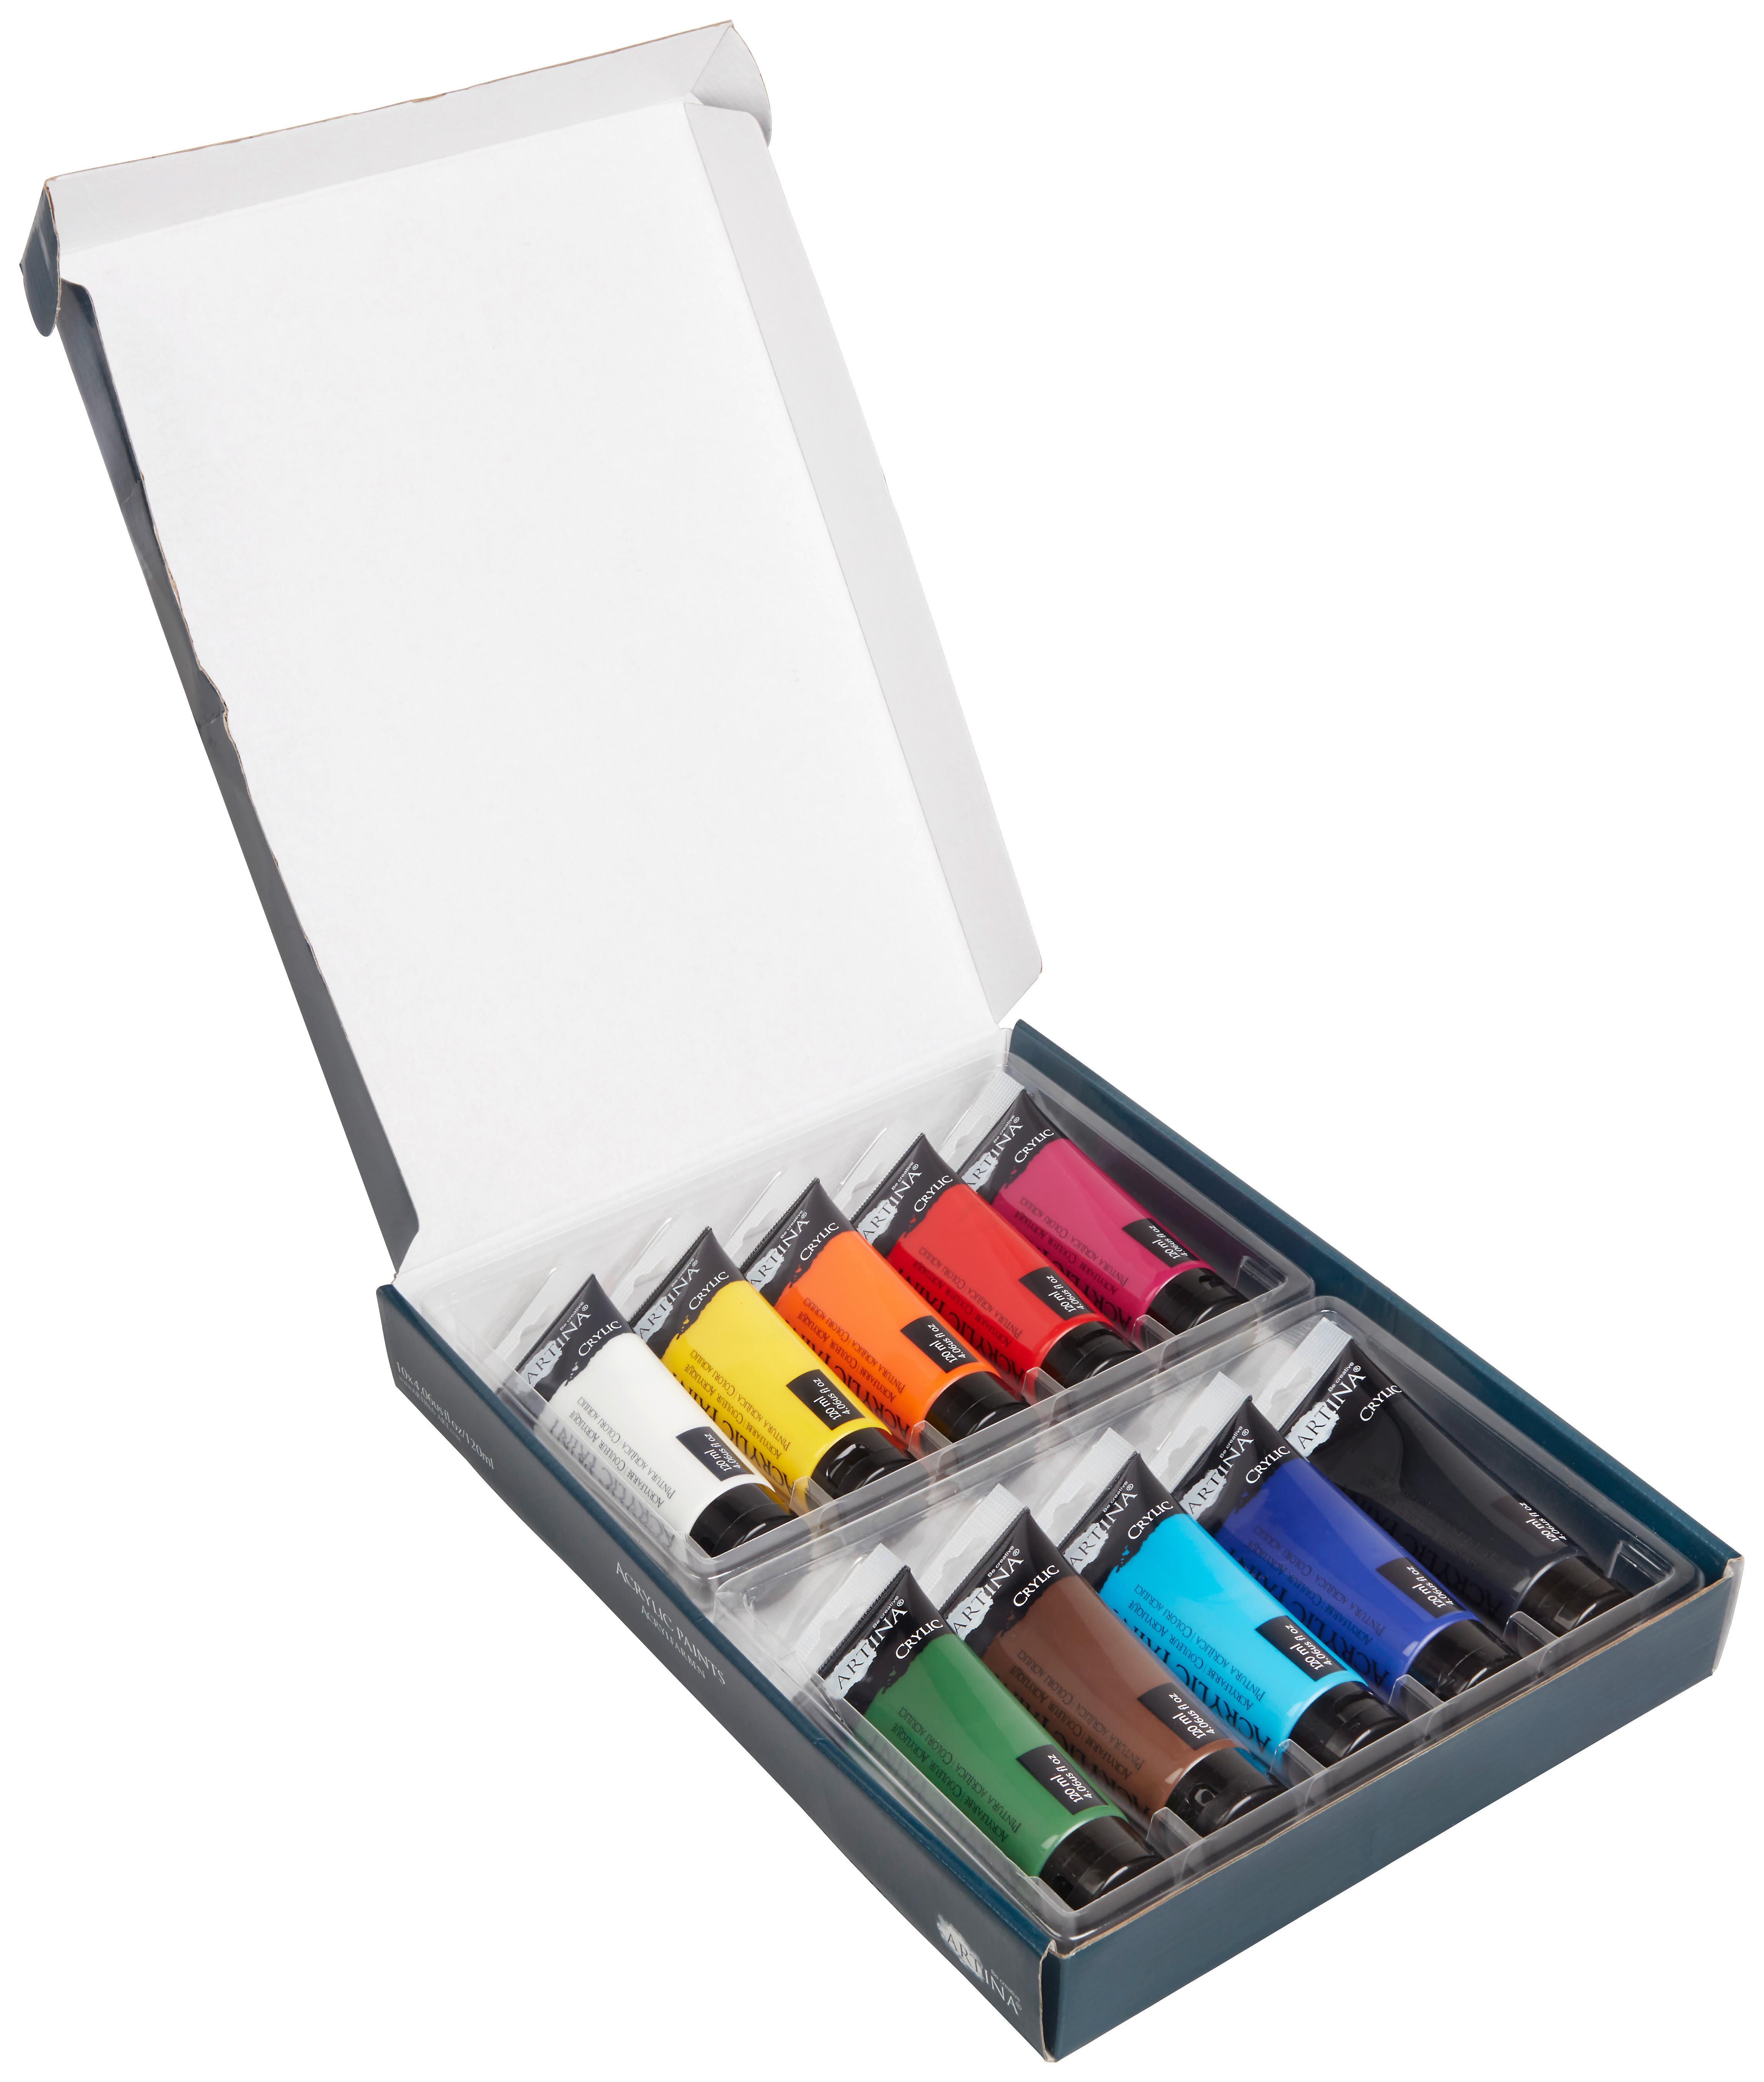 Acrylfarbenset Colour, 10-teilig - Blau/Weiss, Basics (31.5/21.5/3.4cm) - Premium Living